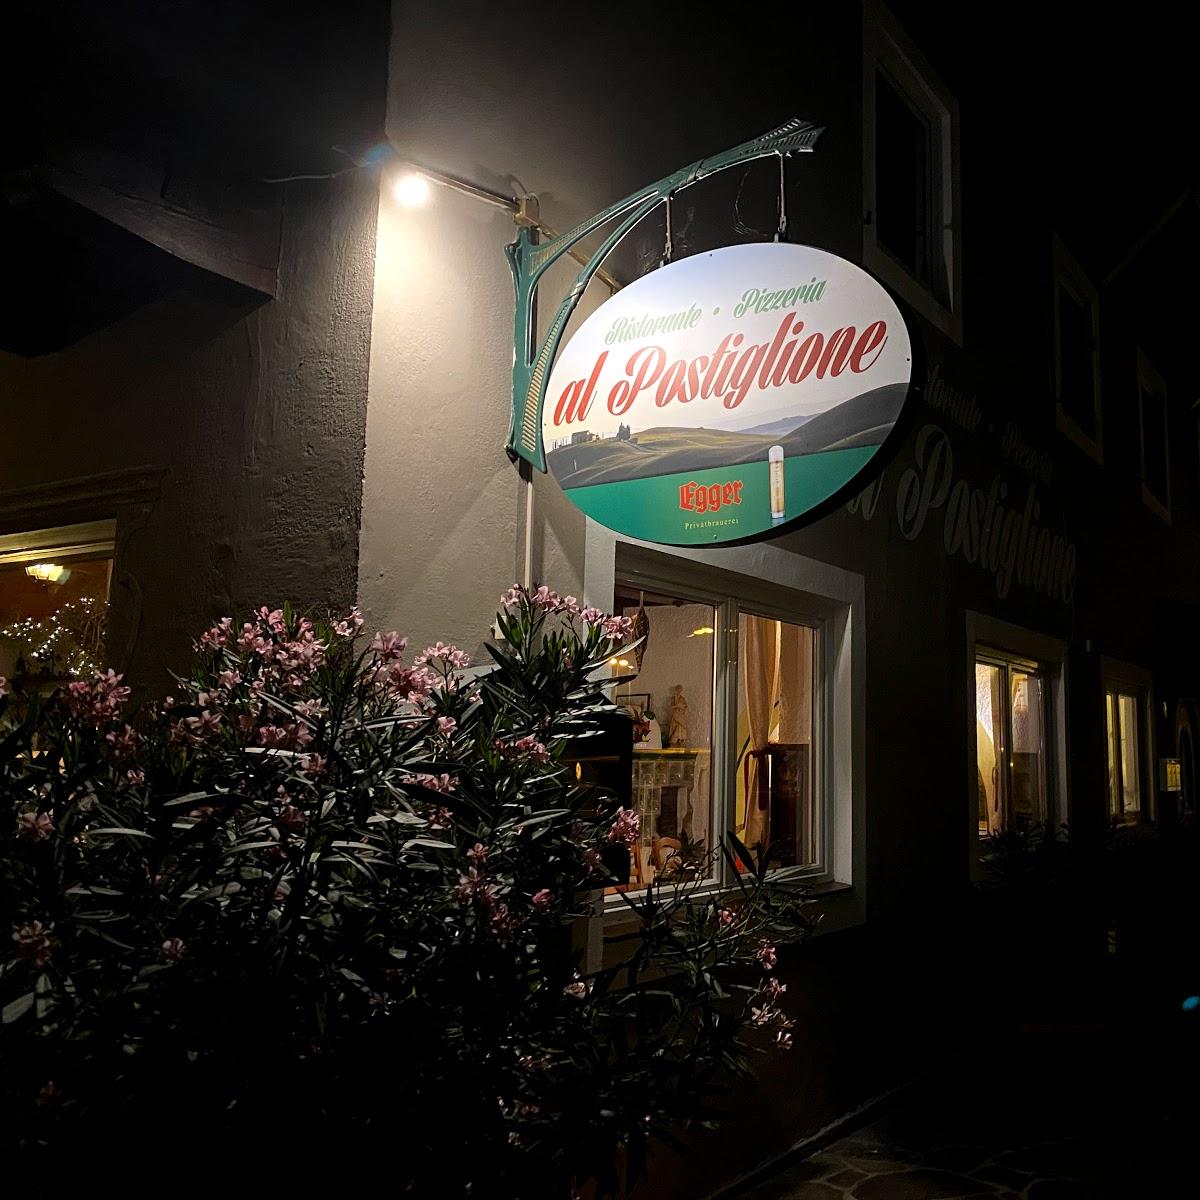 Restaurant "Ristorante Pizzeria al Postiglione" in Kössen